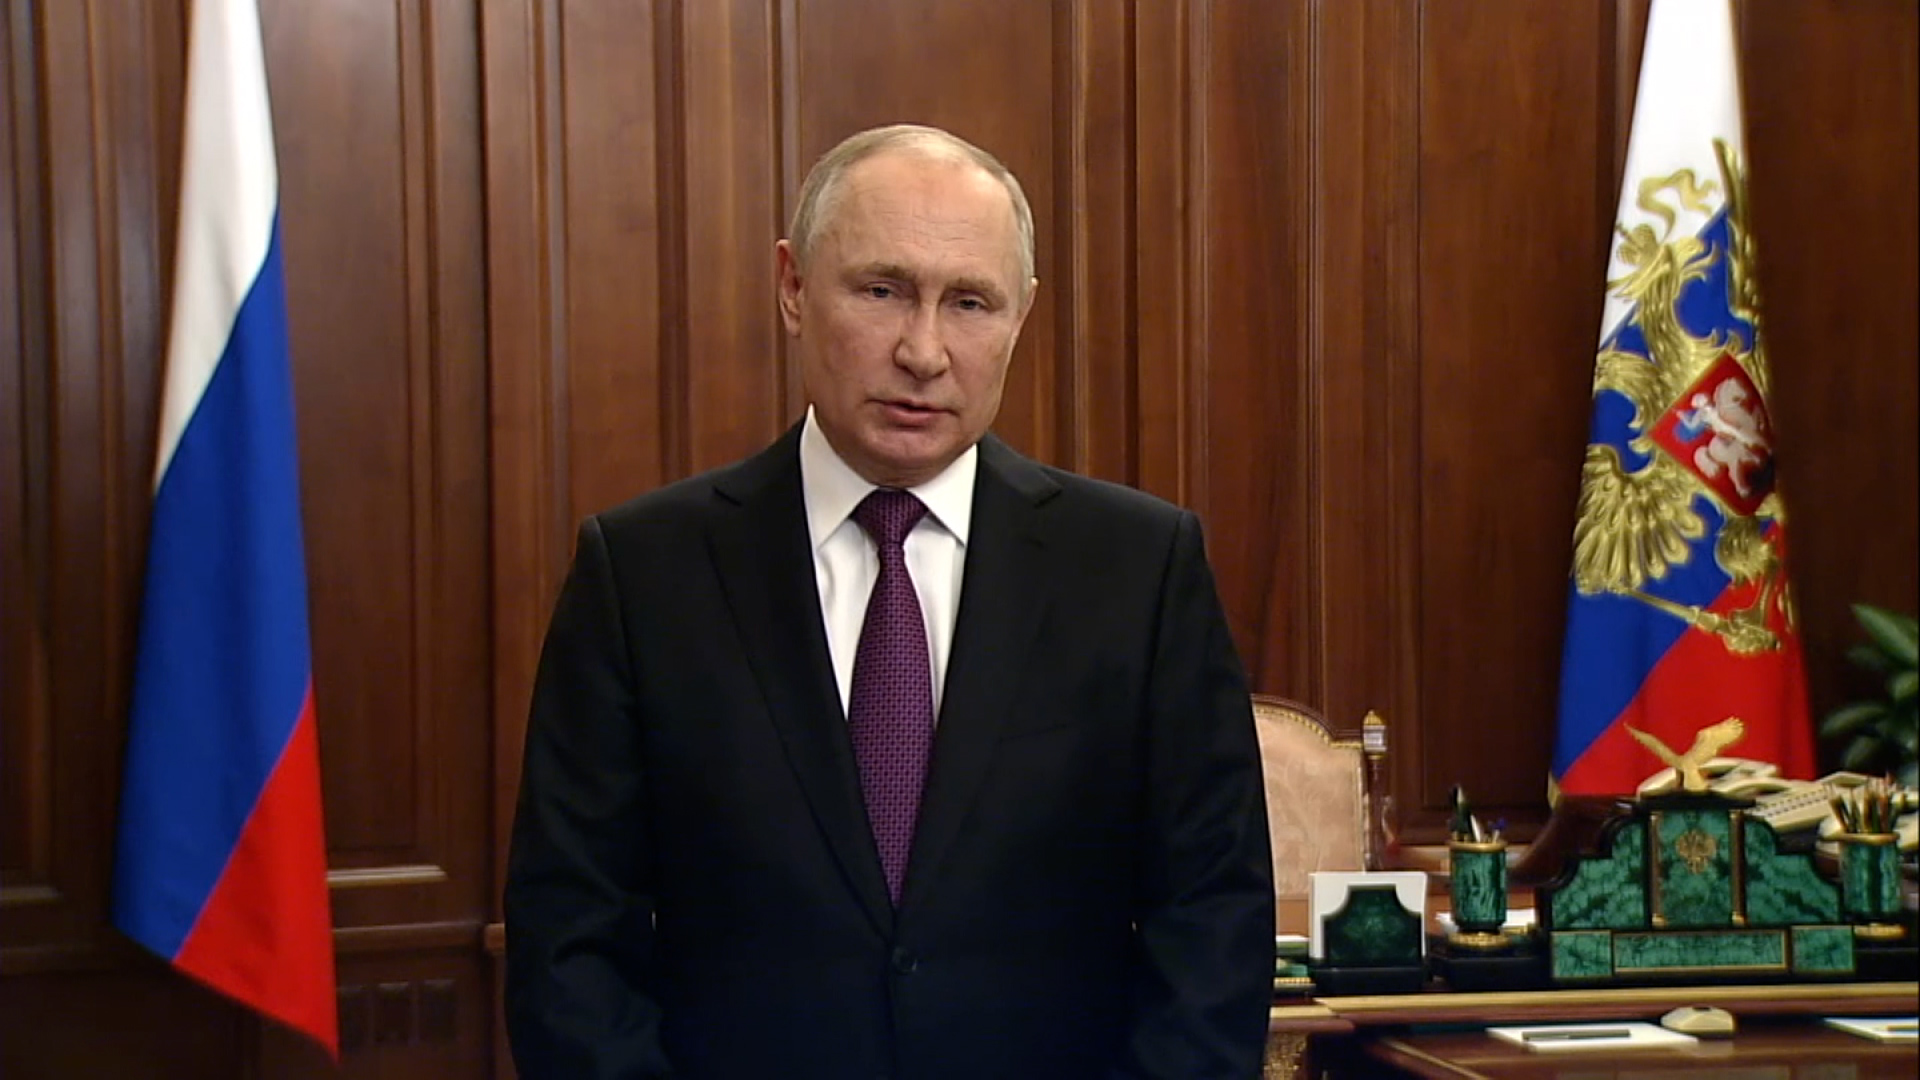 Russian President Vladimir Putin speaks in a video message released by the Kremlin on February 23.